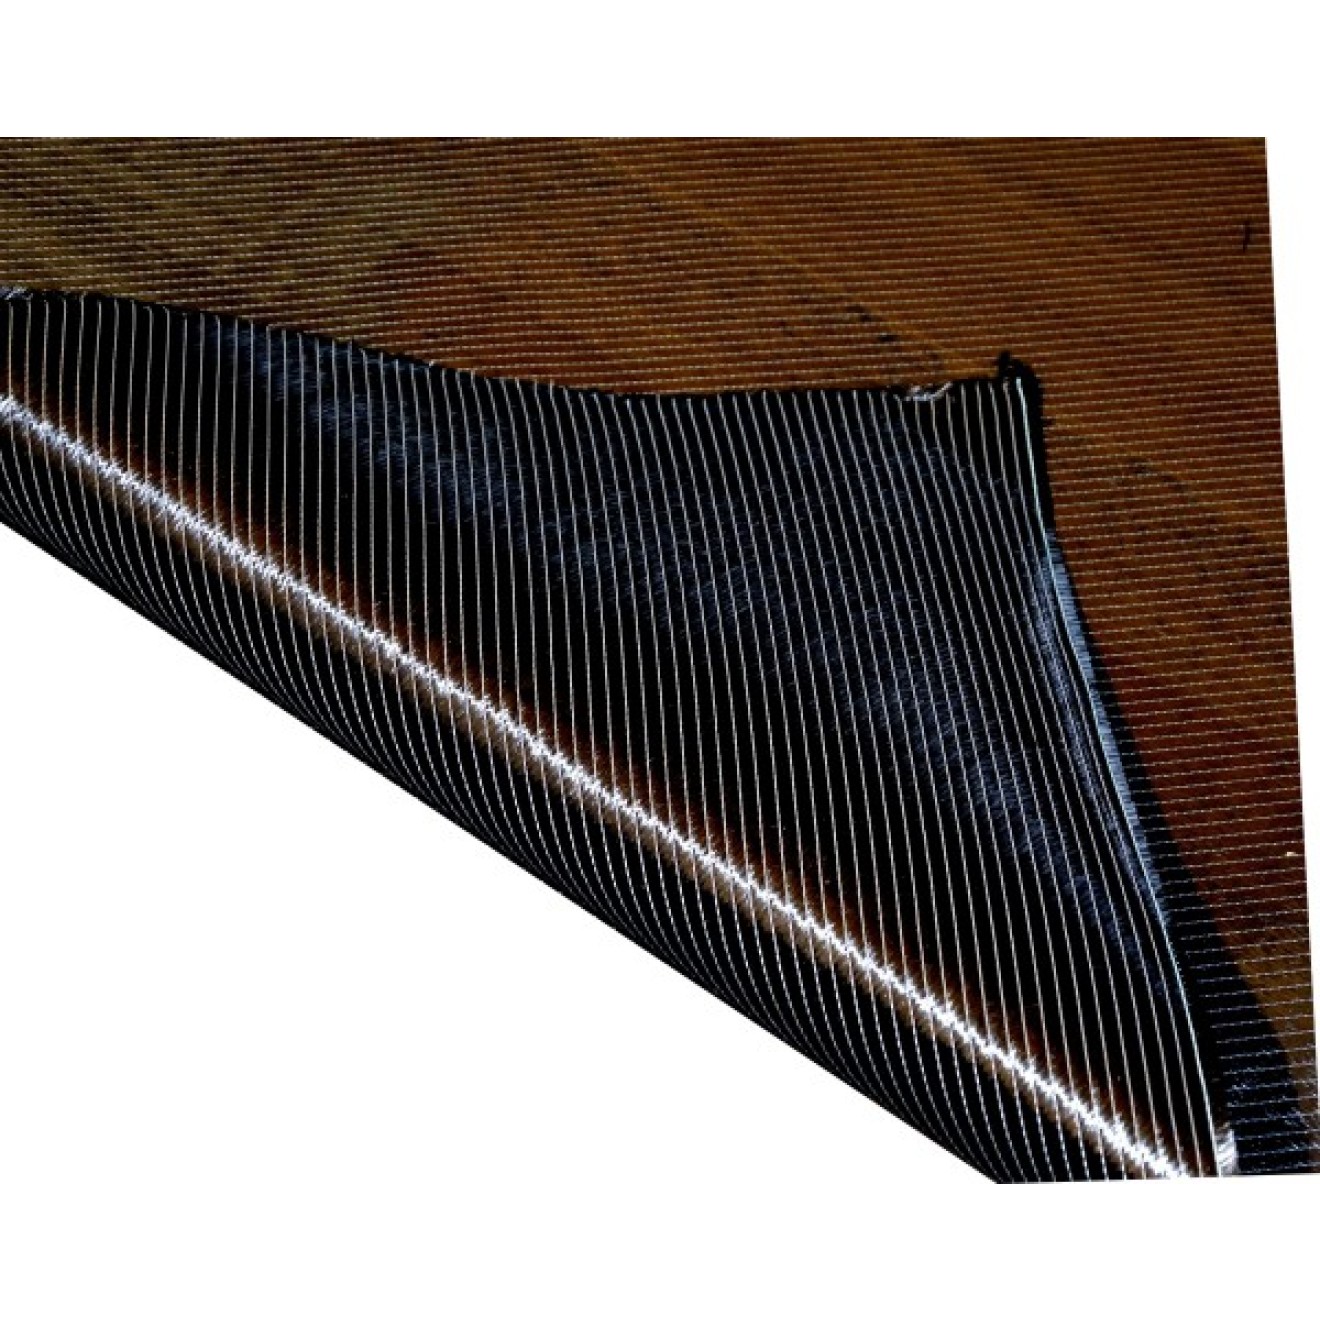 Carbon non-crimp fabric biaxial 300g/m², width 127cm